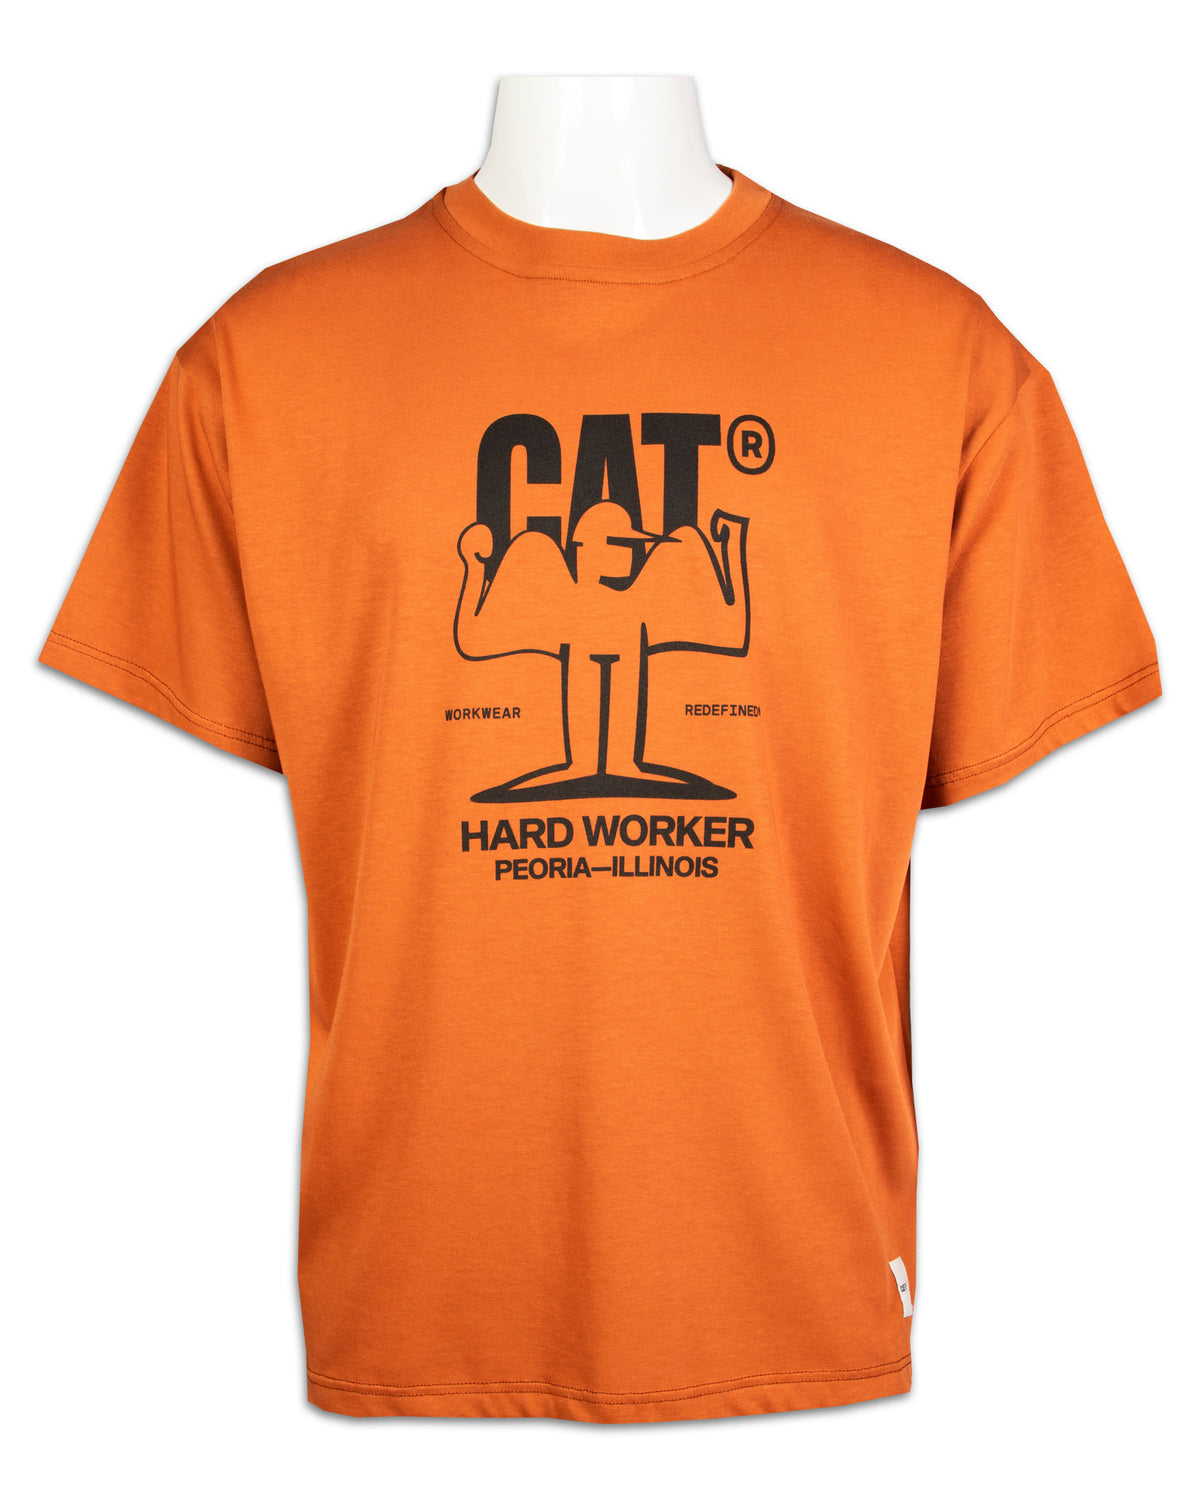 Man Cat wwr Muscles T-shirt Orange